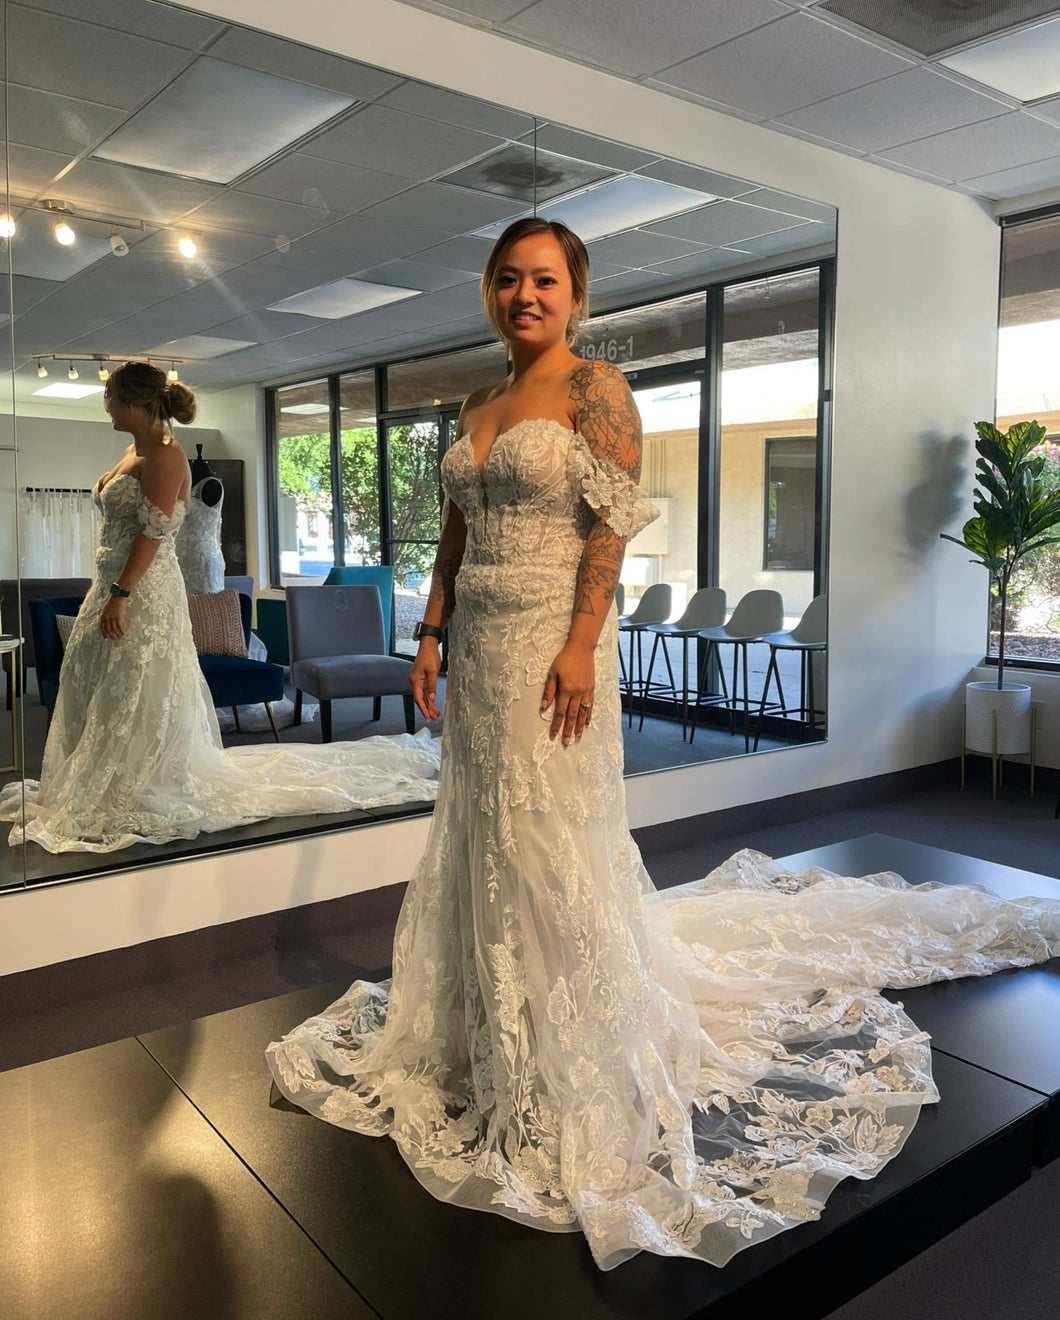 Morilee 'Blossom' wedding dress size-06 NEW